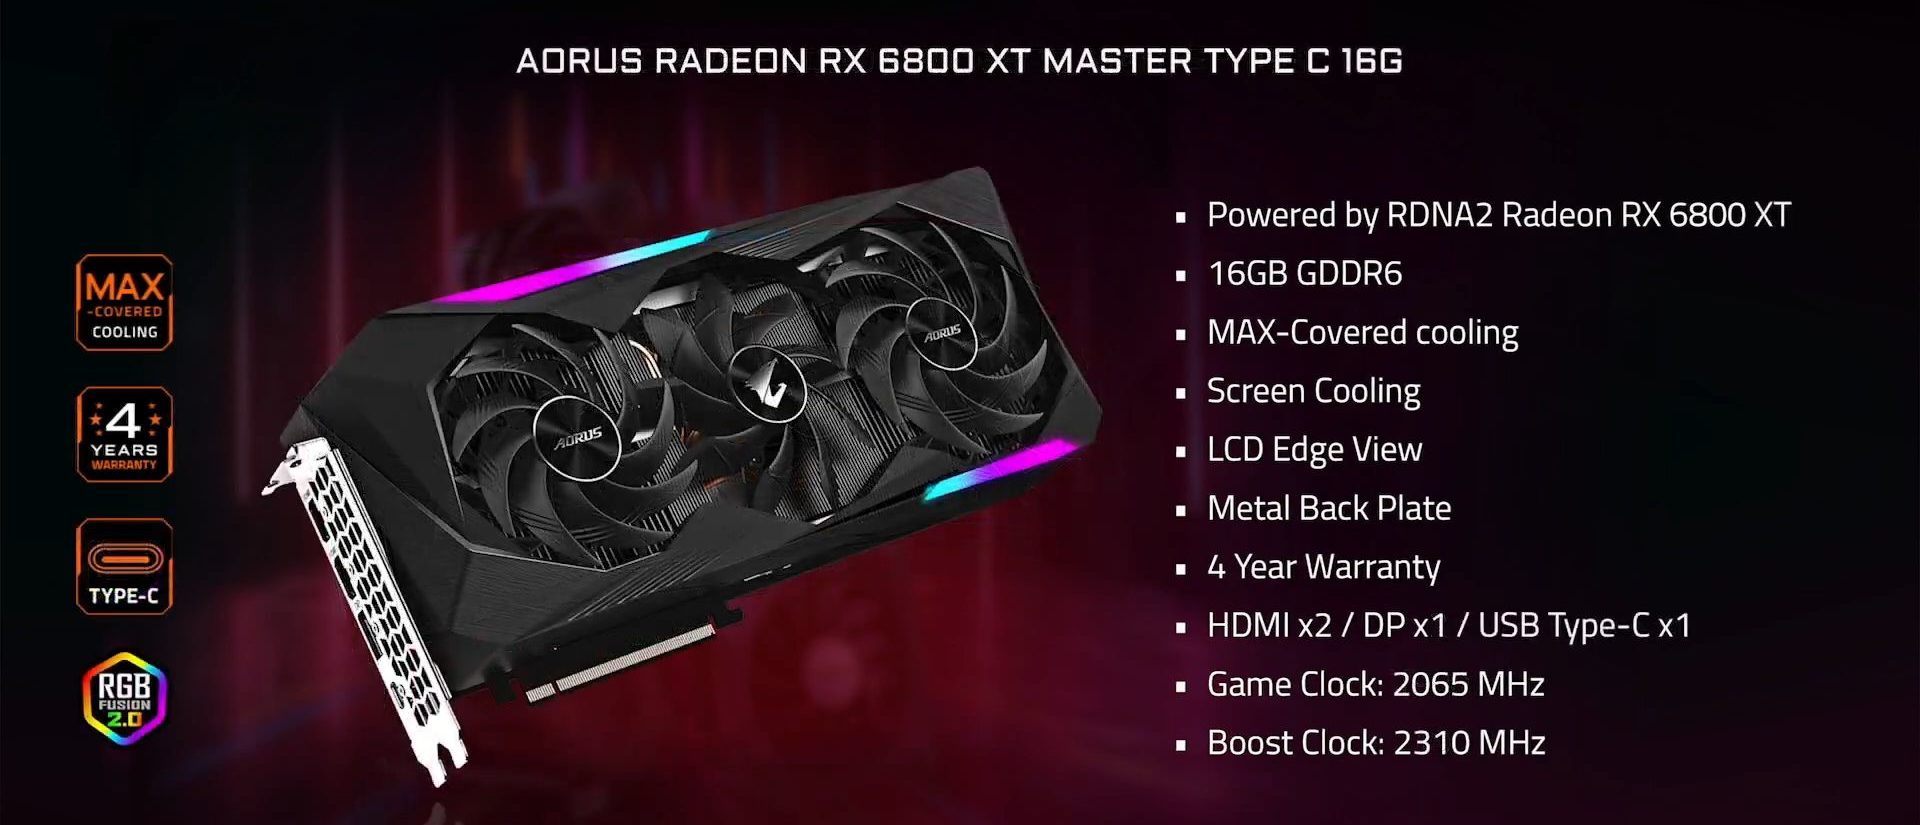 AORUS AMD Radeon RX 6800 XT Master Type C 16G Graphics Card, 16GB